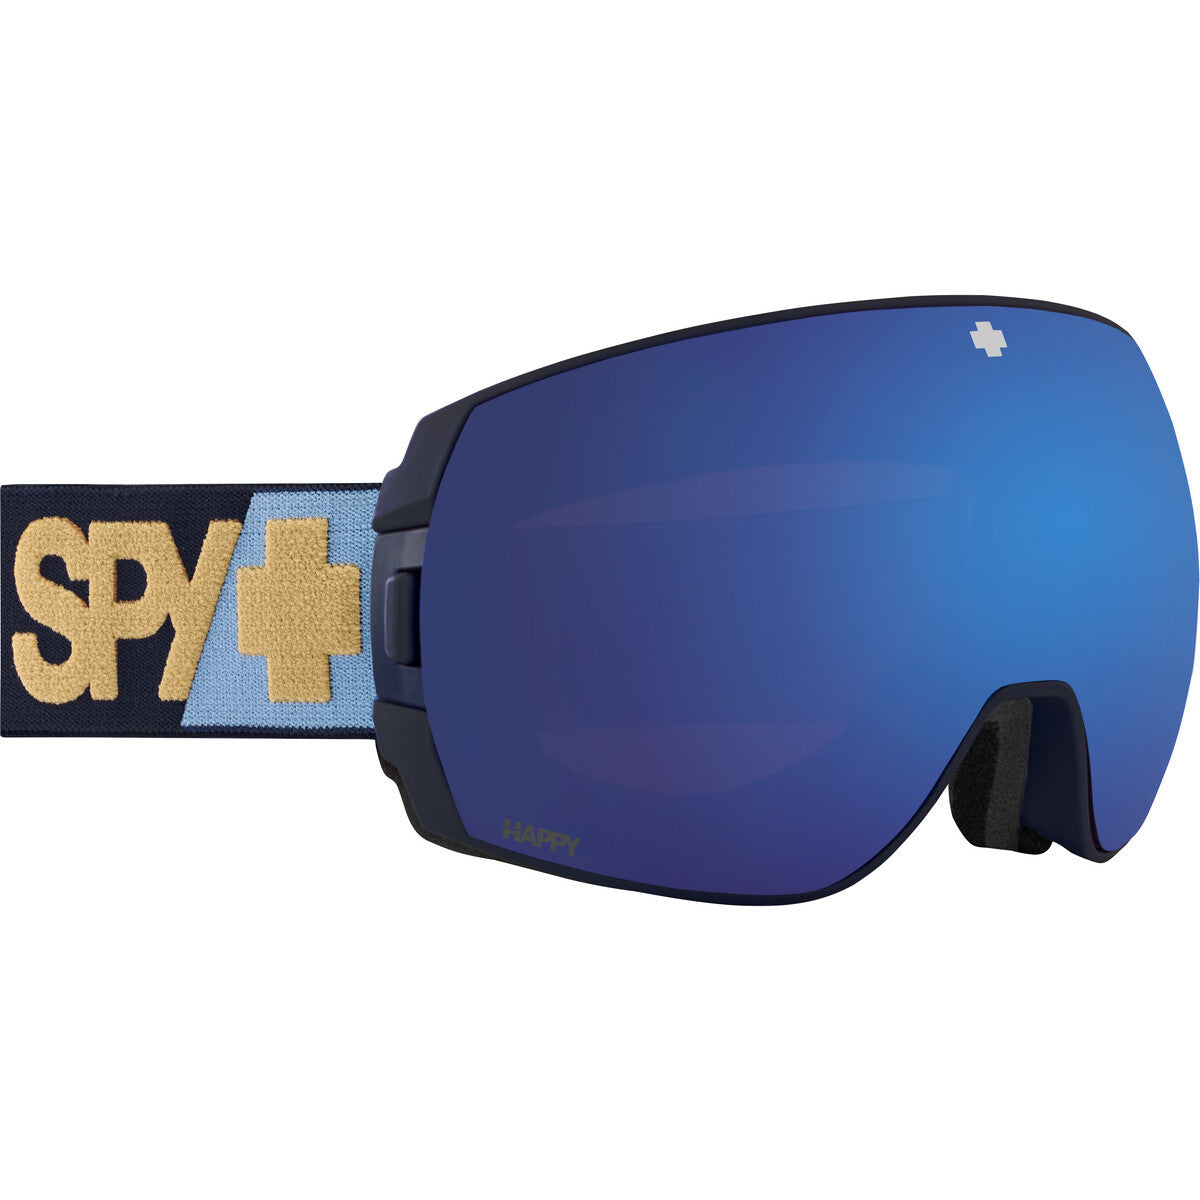 Spy Legacy Goggles  Dark Blue Large-Extra Large L-XL 57-60